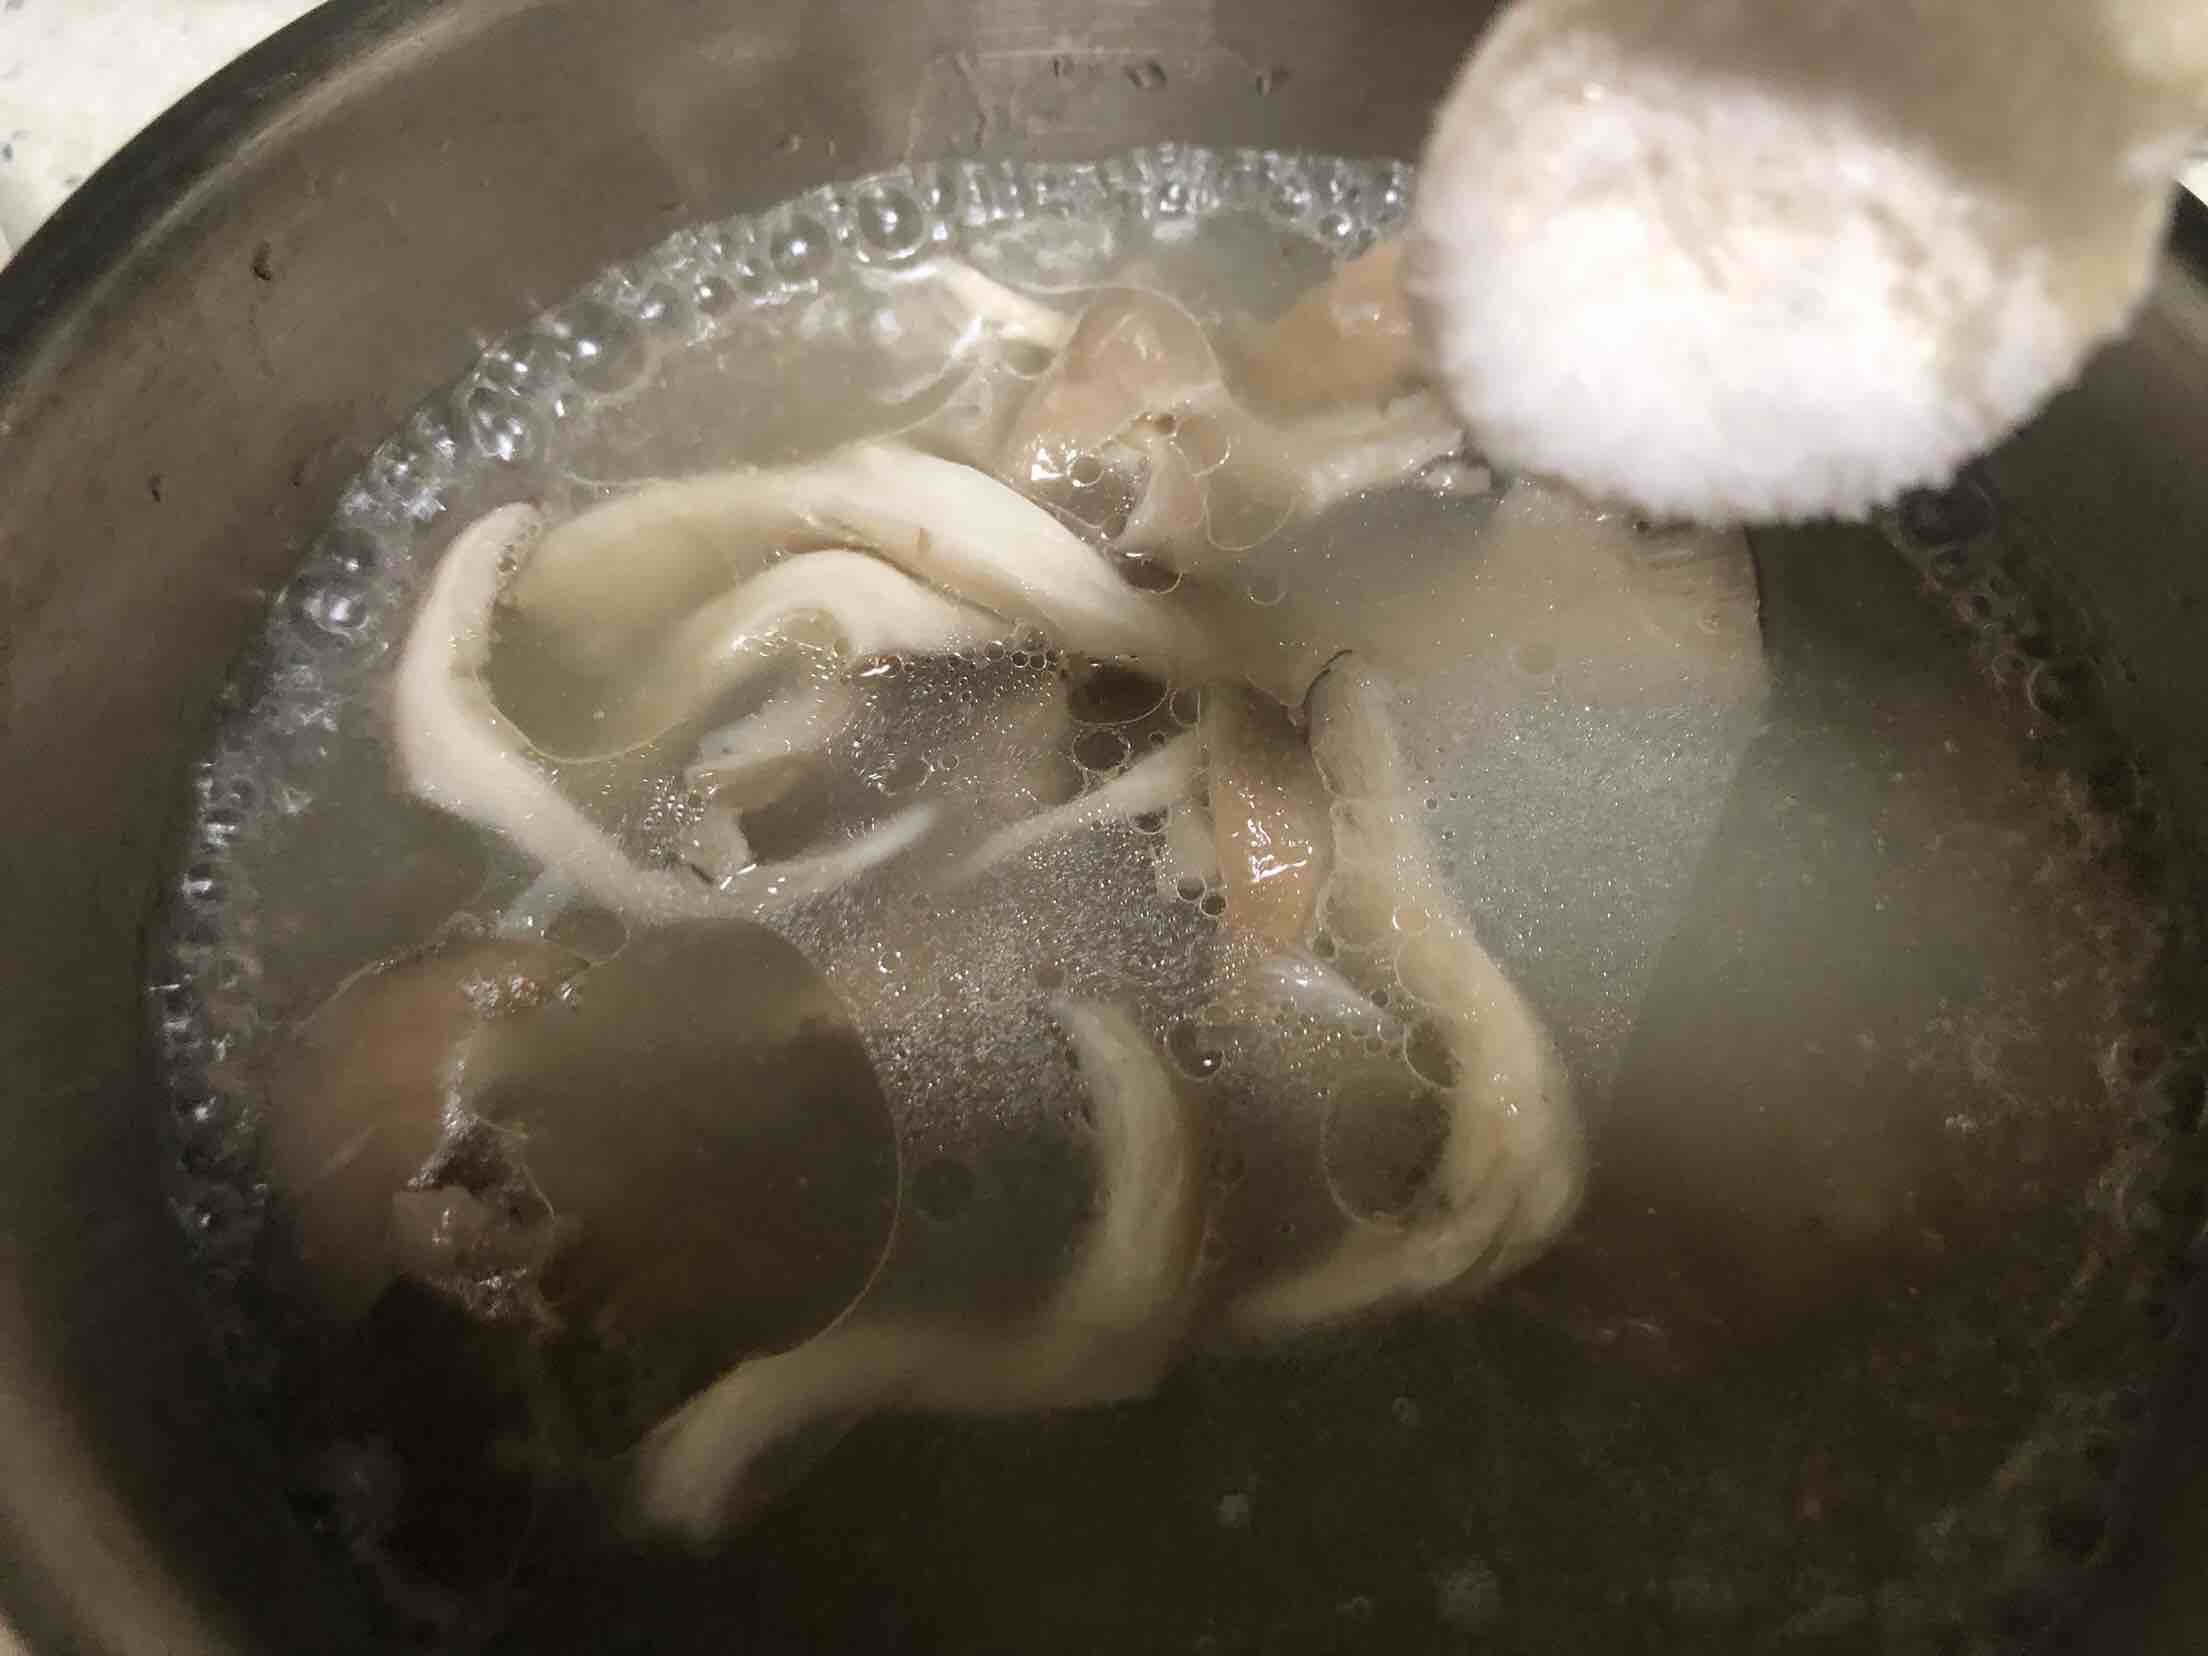 Pork Ribs Noodle Soup recipe